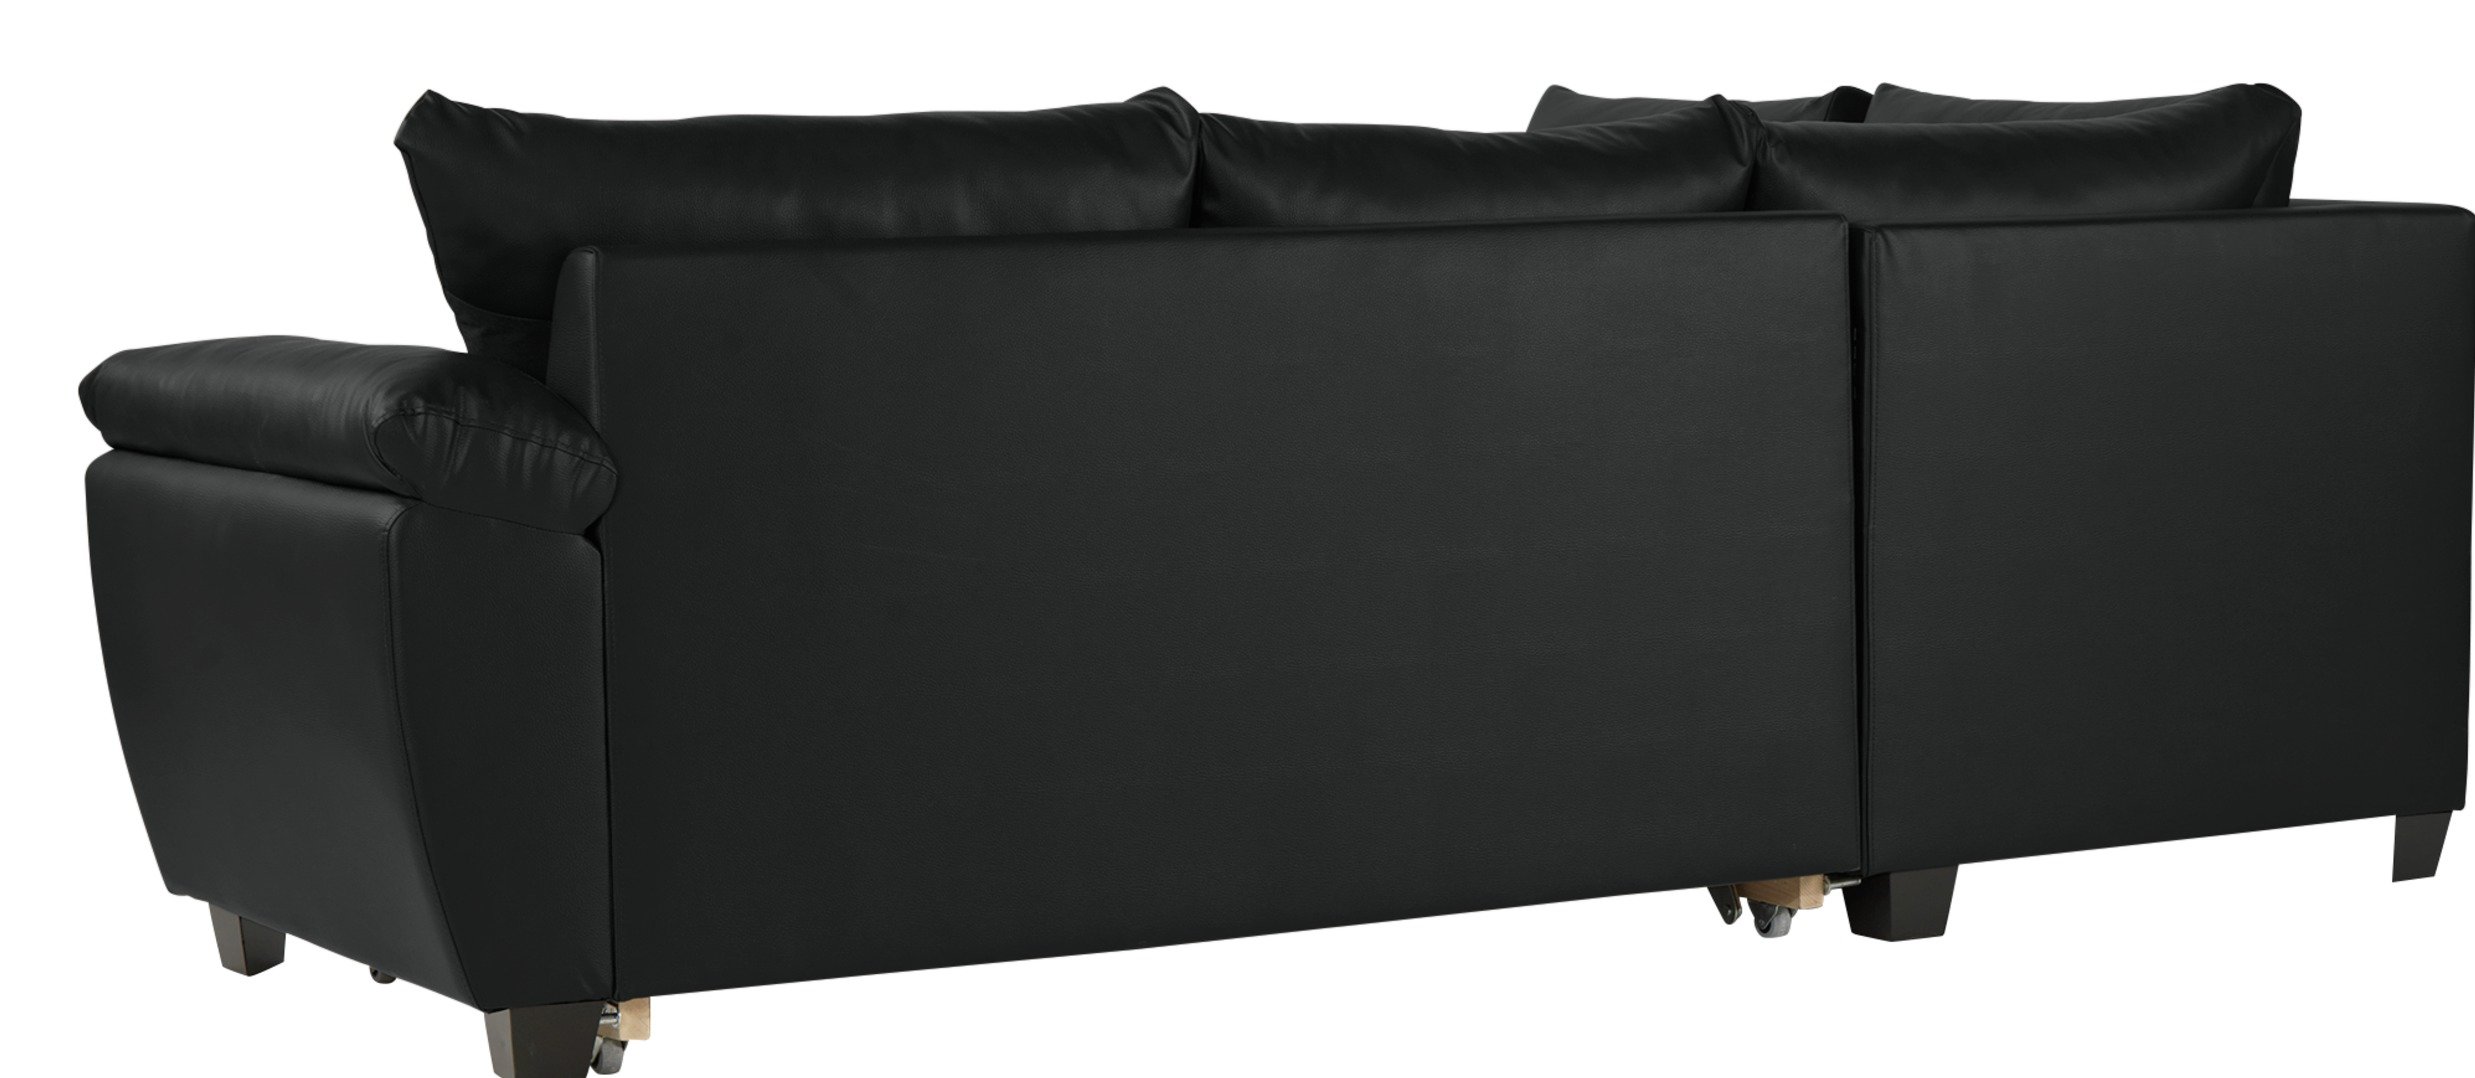 argos fernando corner sofa bed